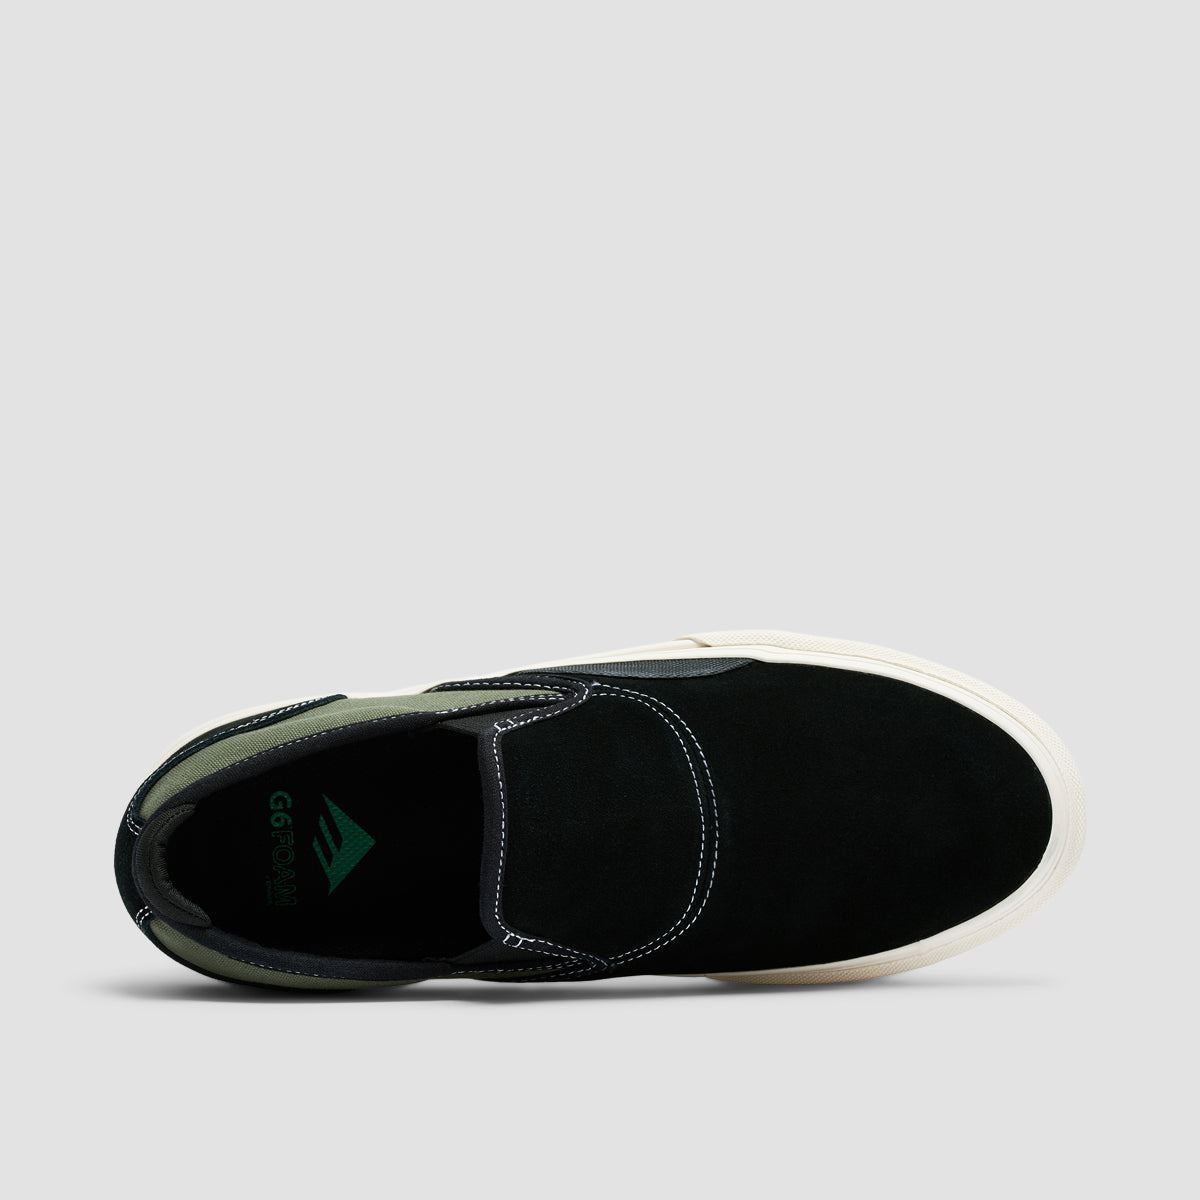 Emerica Wino G6 Slip On Shoes Black/Olive